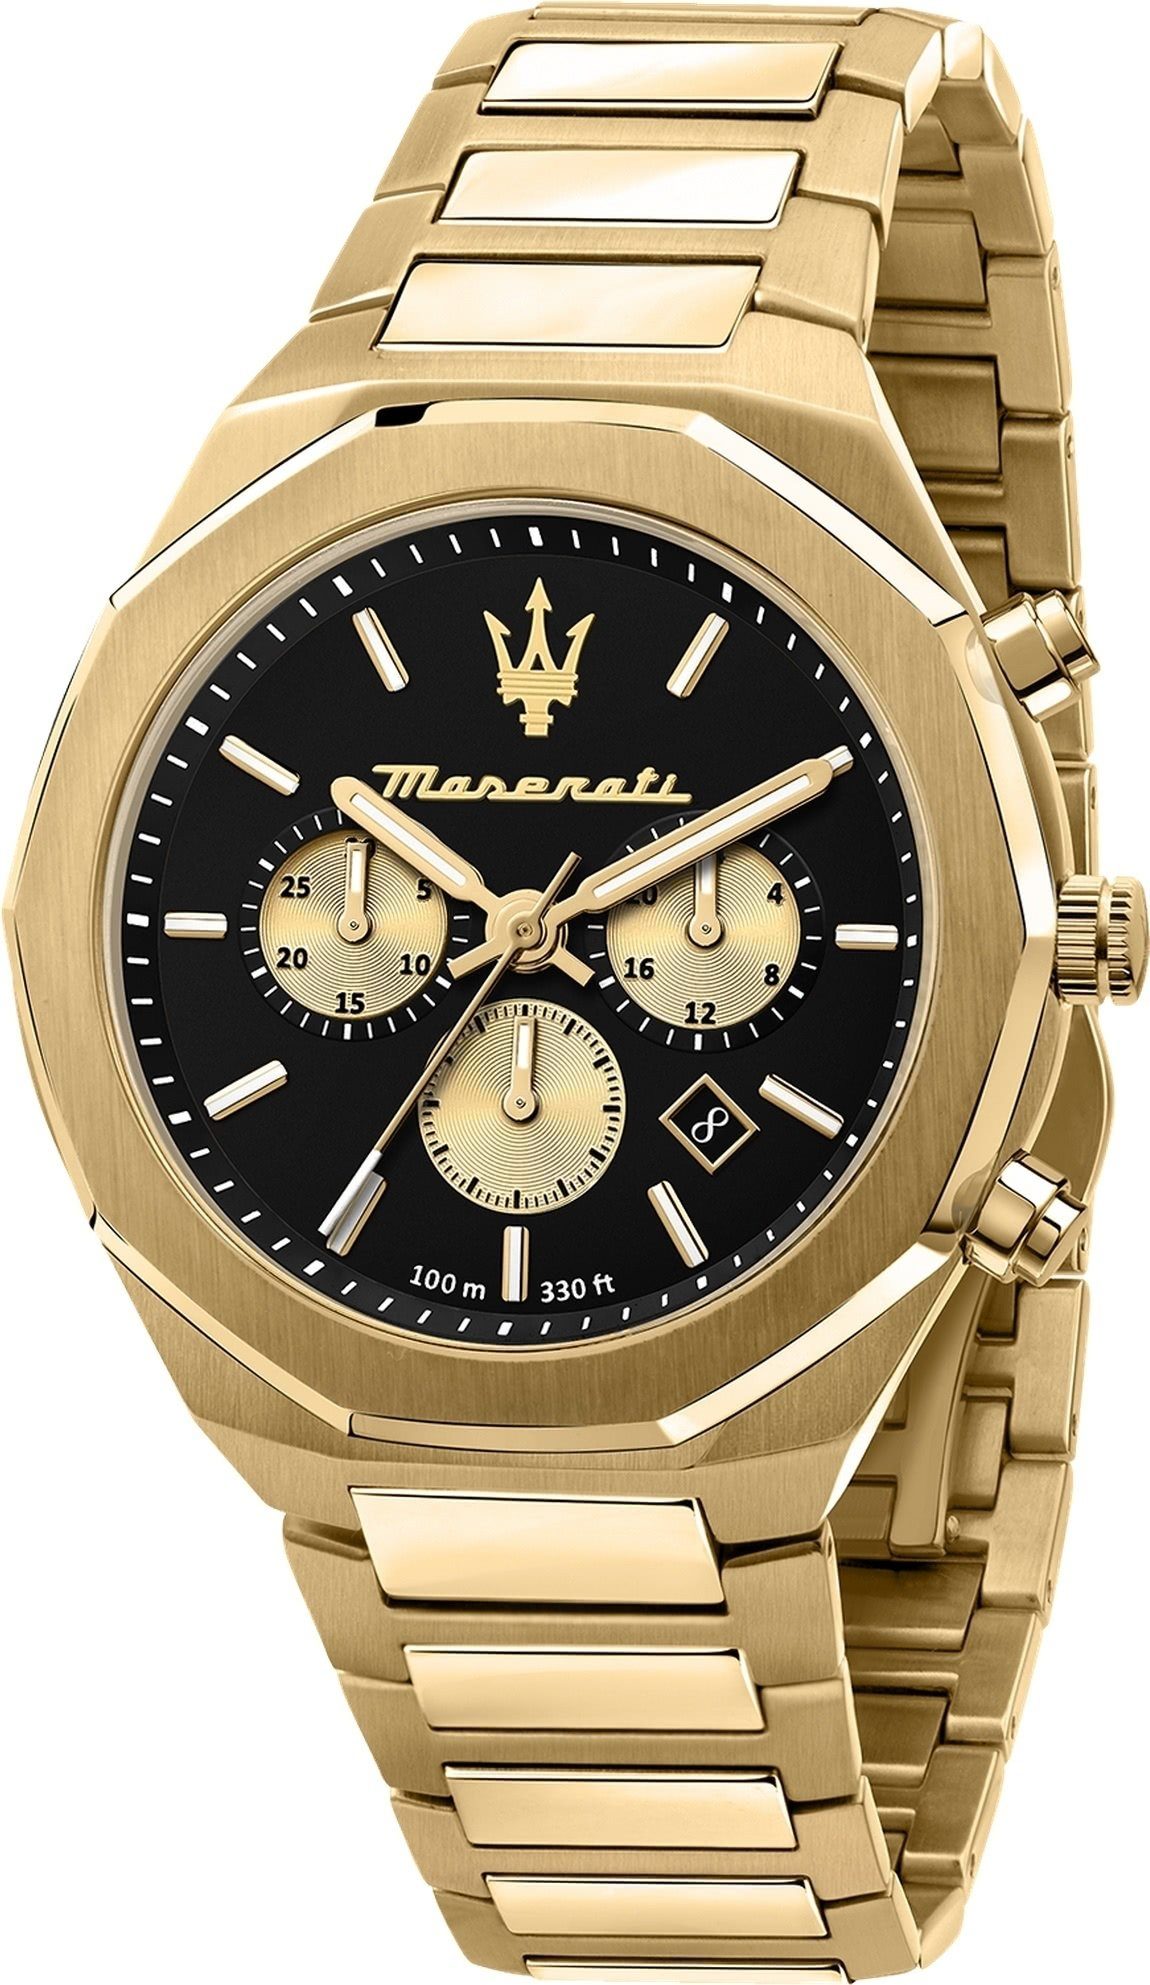 MASERATI Chronograph Maserati Made-In rund, (ca. Herrenuhr groß Chronograph, Herren Edelstahlarmband, Italy gold Uhr 45mm)